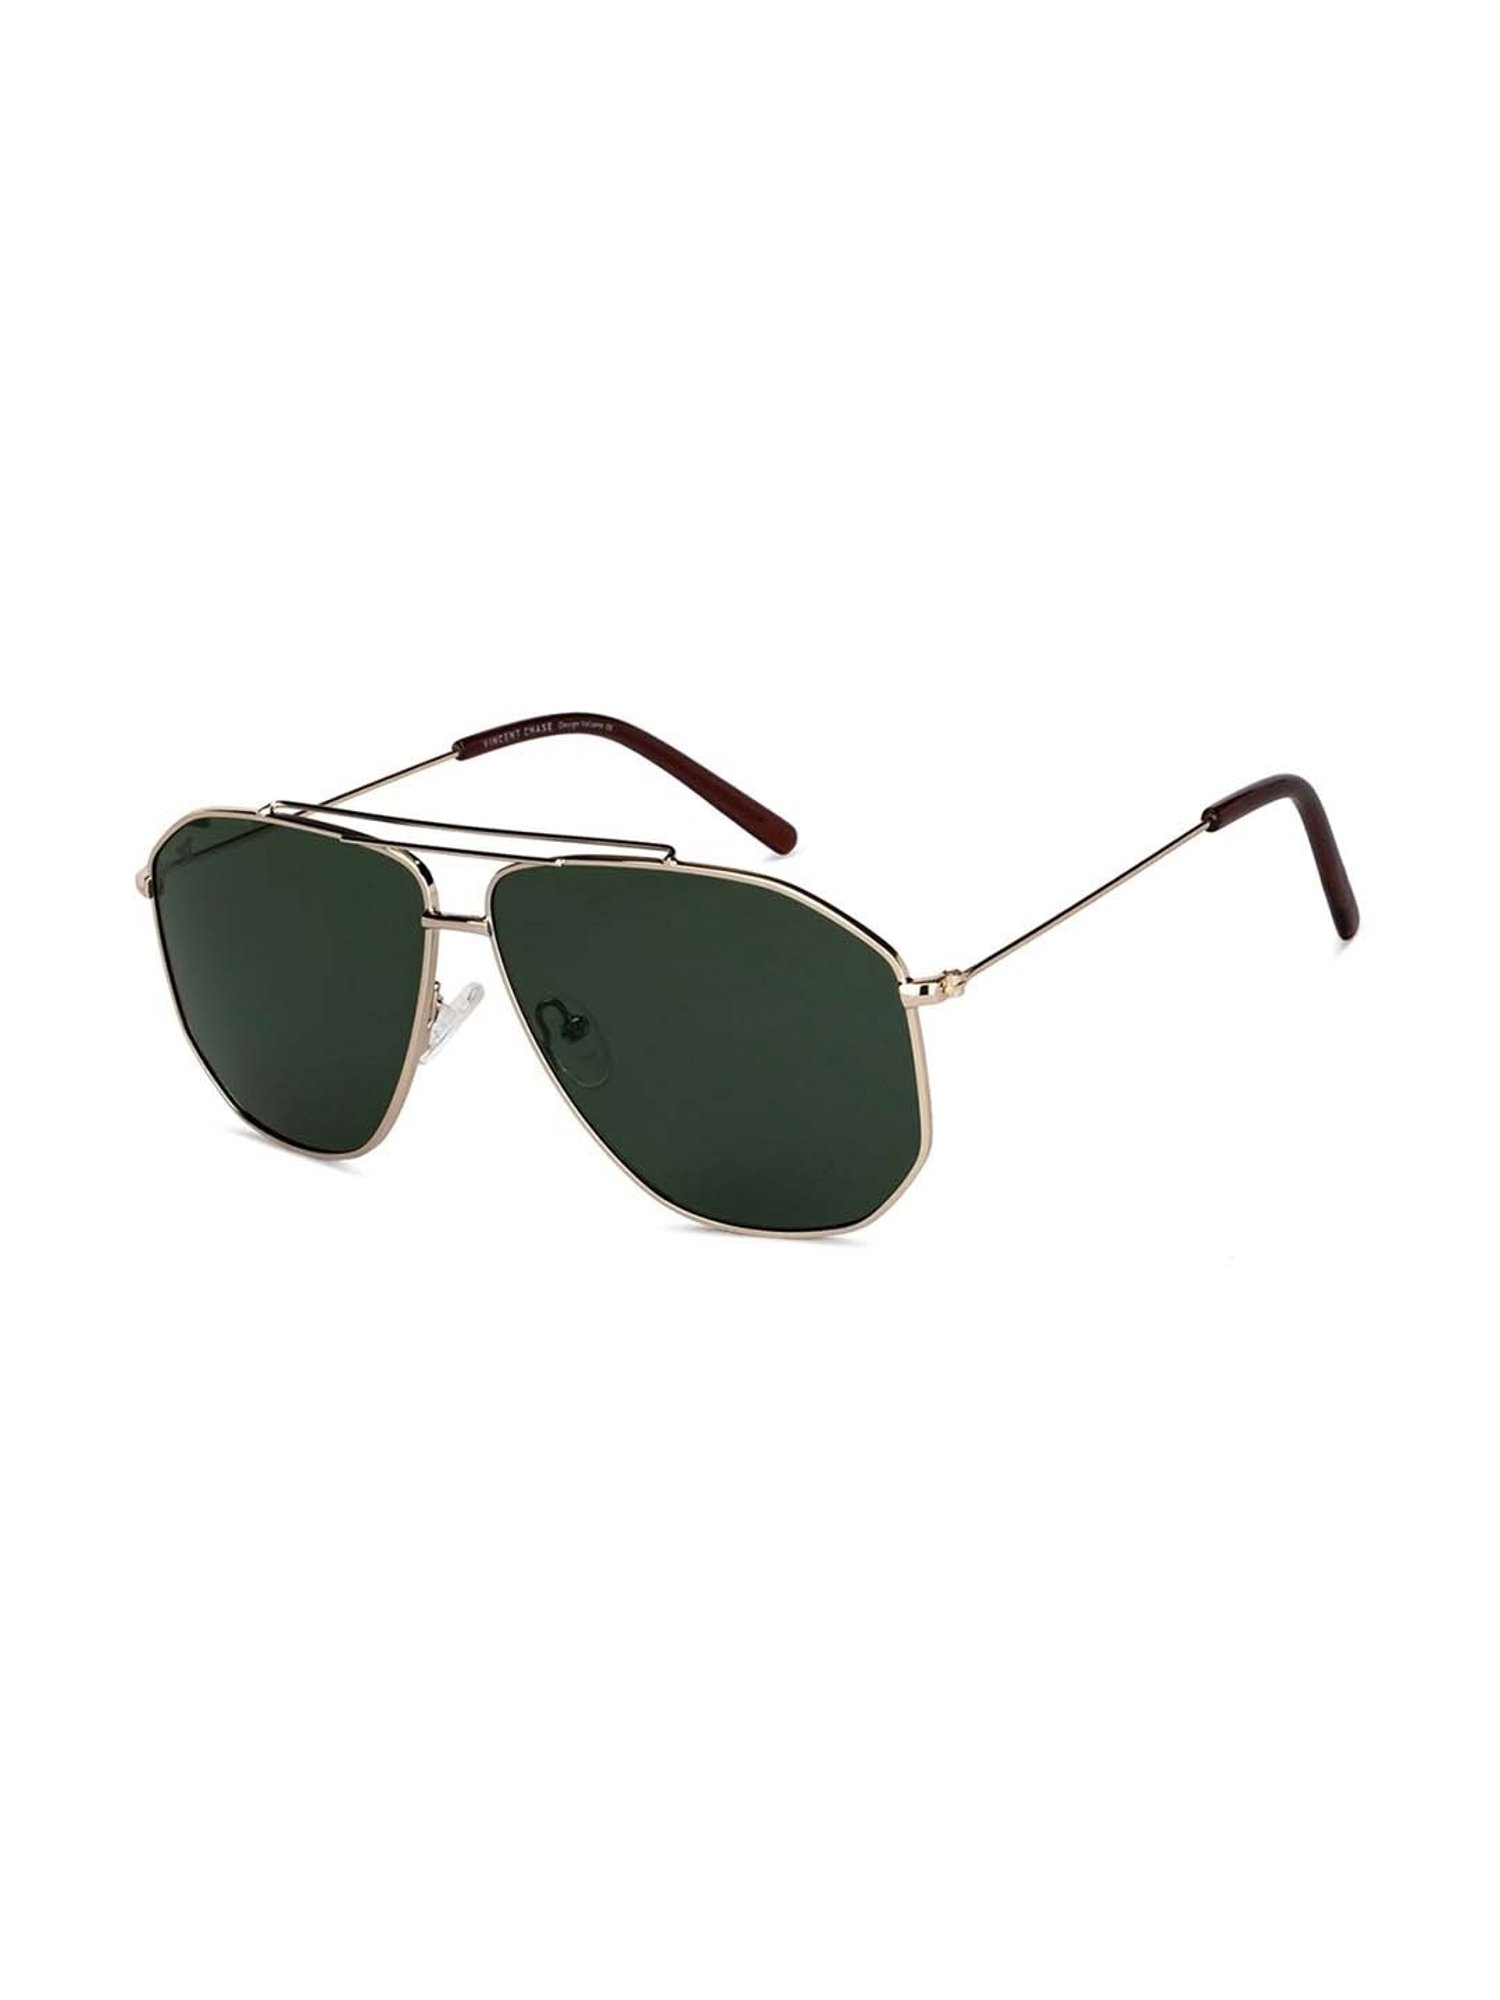 Buy Vincent Chase Pink Rectangular Sunglasses at Best Price @ Tata CLiQ